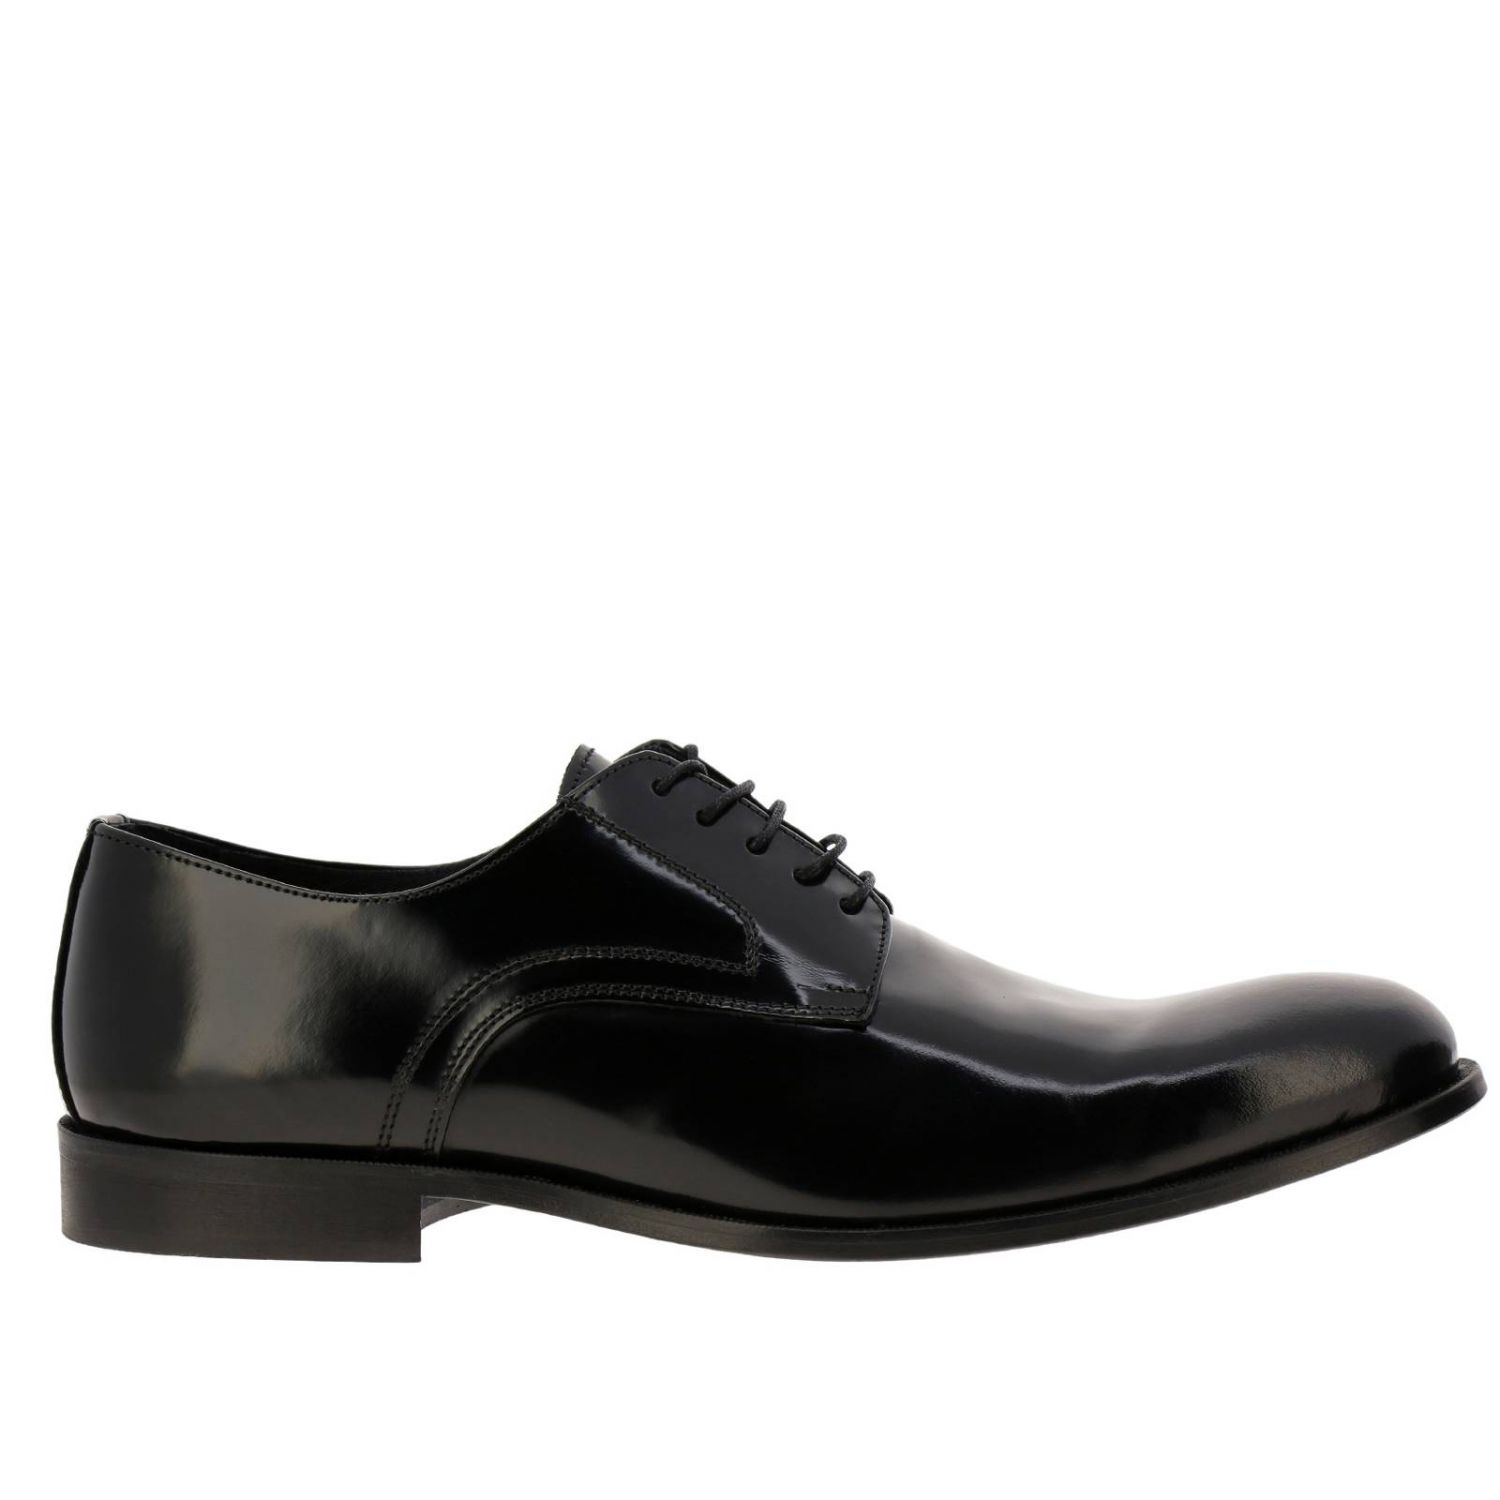 Manuel Ritz Outlet: Sneakers men | Brogue Shoes Manuel Ritz Men Black ...